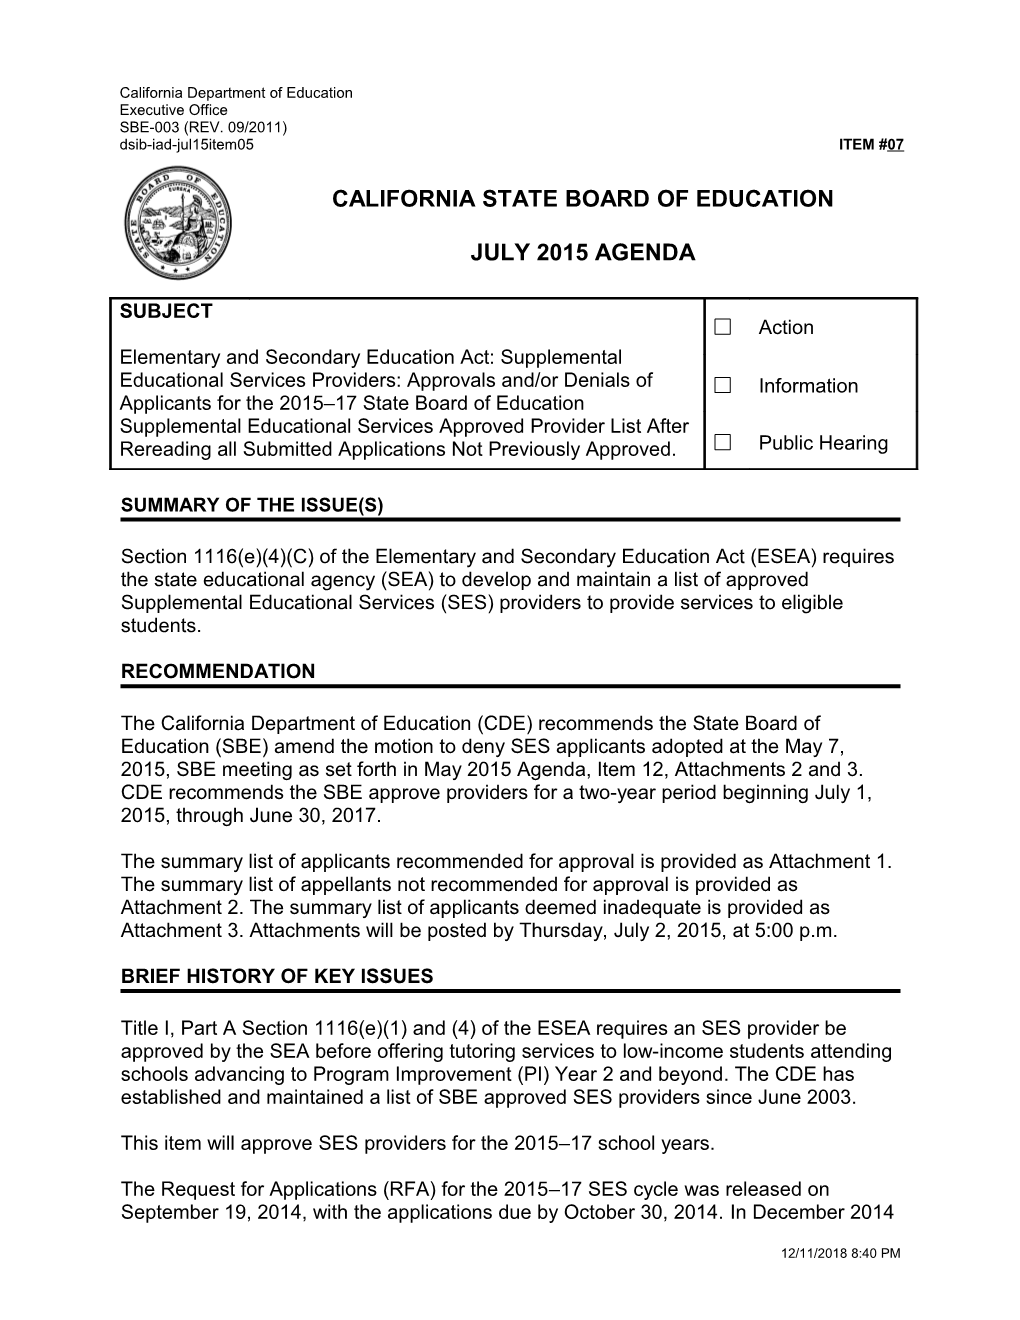 July 2015 Agenda Item 07 - Meeting Agendas (CA State Board of Education)